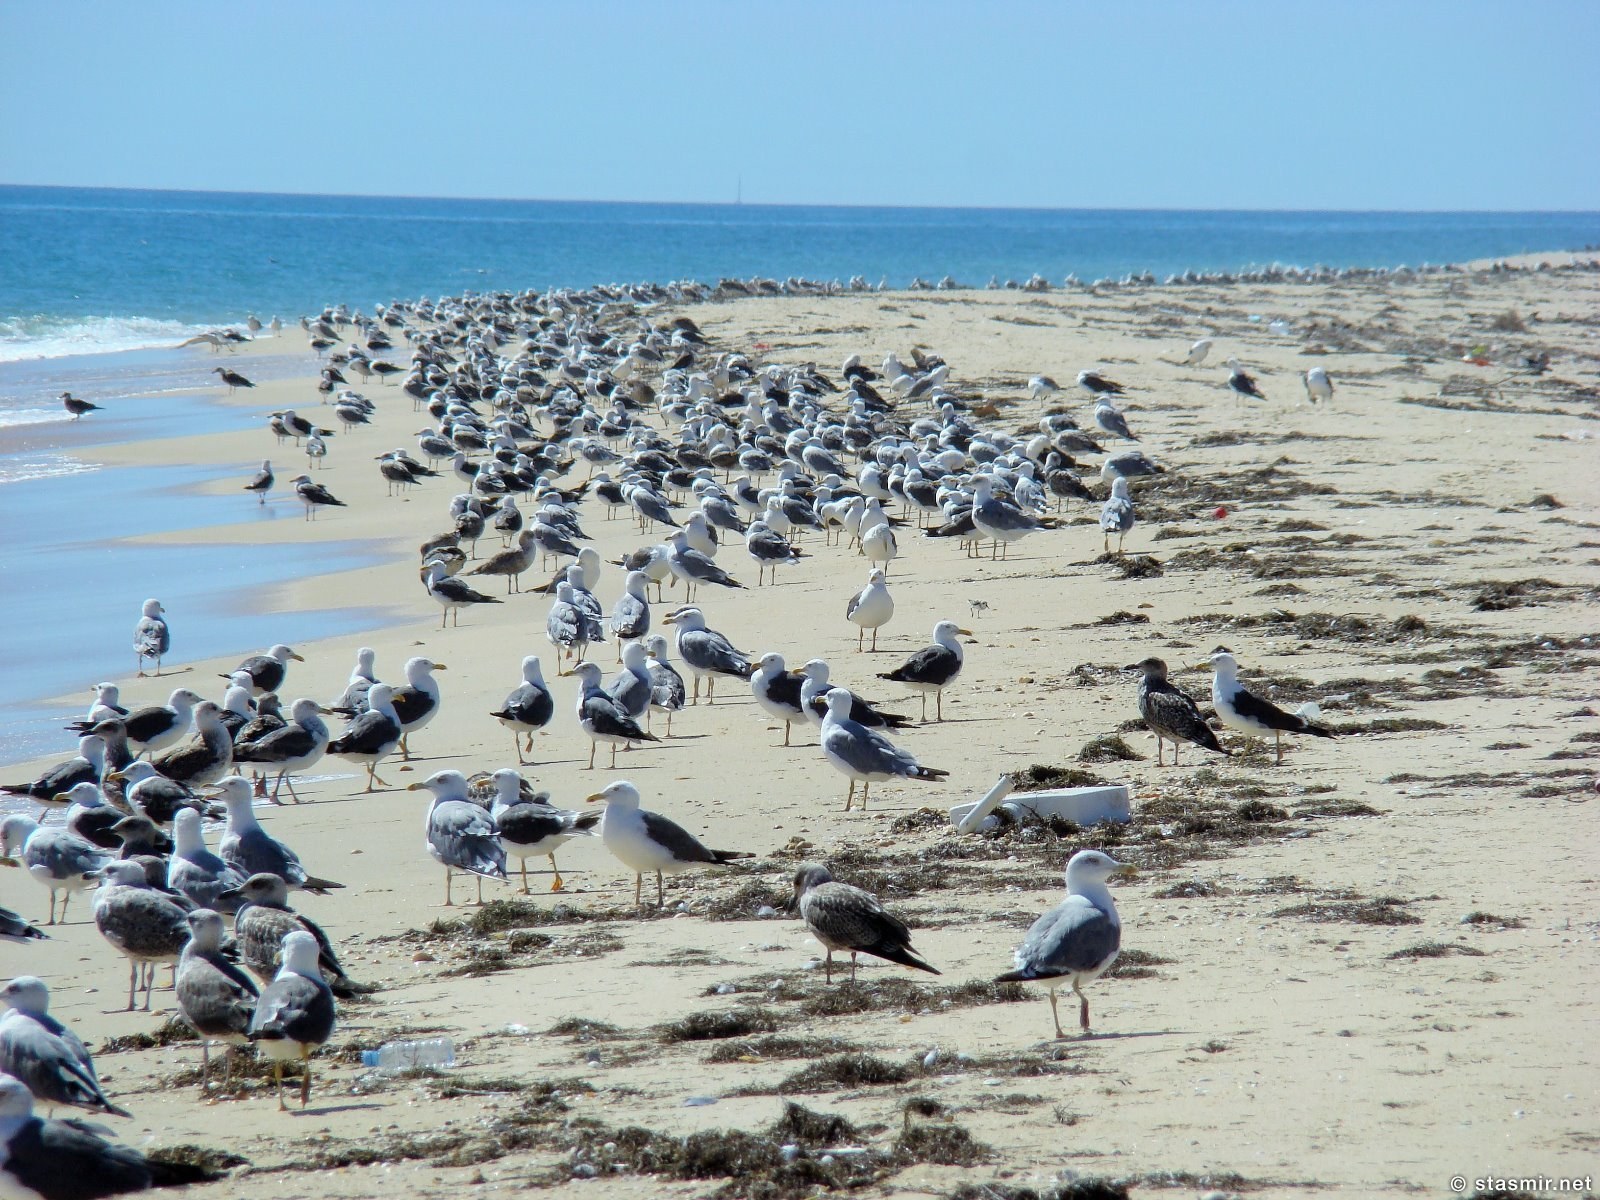 птицы на Ria Formosa или Риа-Формоза, Ilha Deserta, Algarve, пляж в Алгарве, фото Стасмир, Photo Stasmir